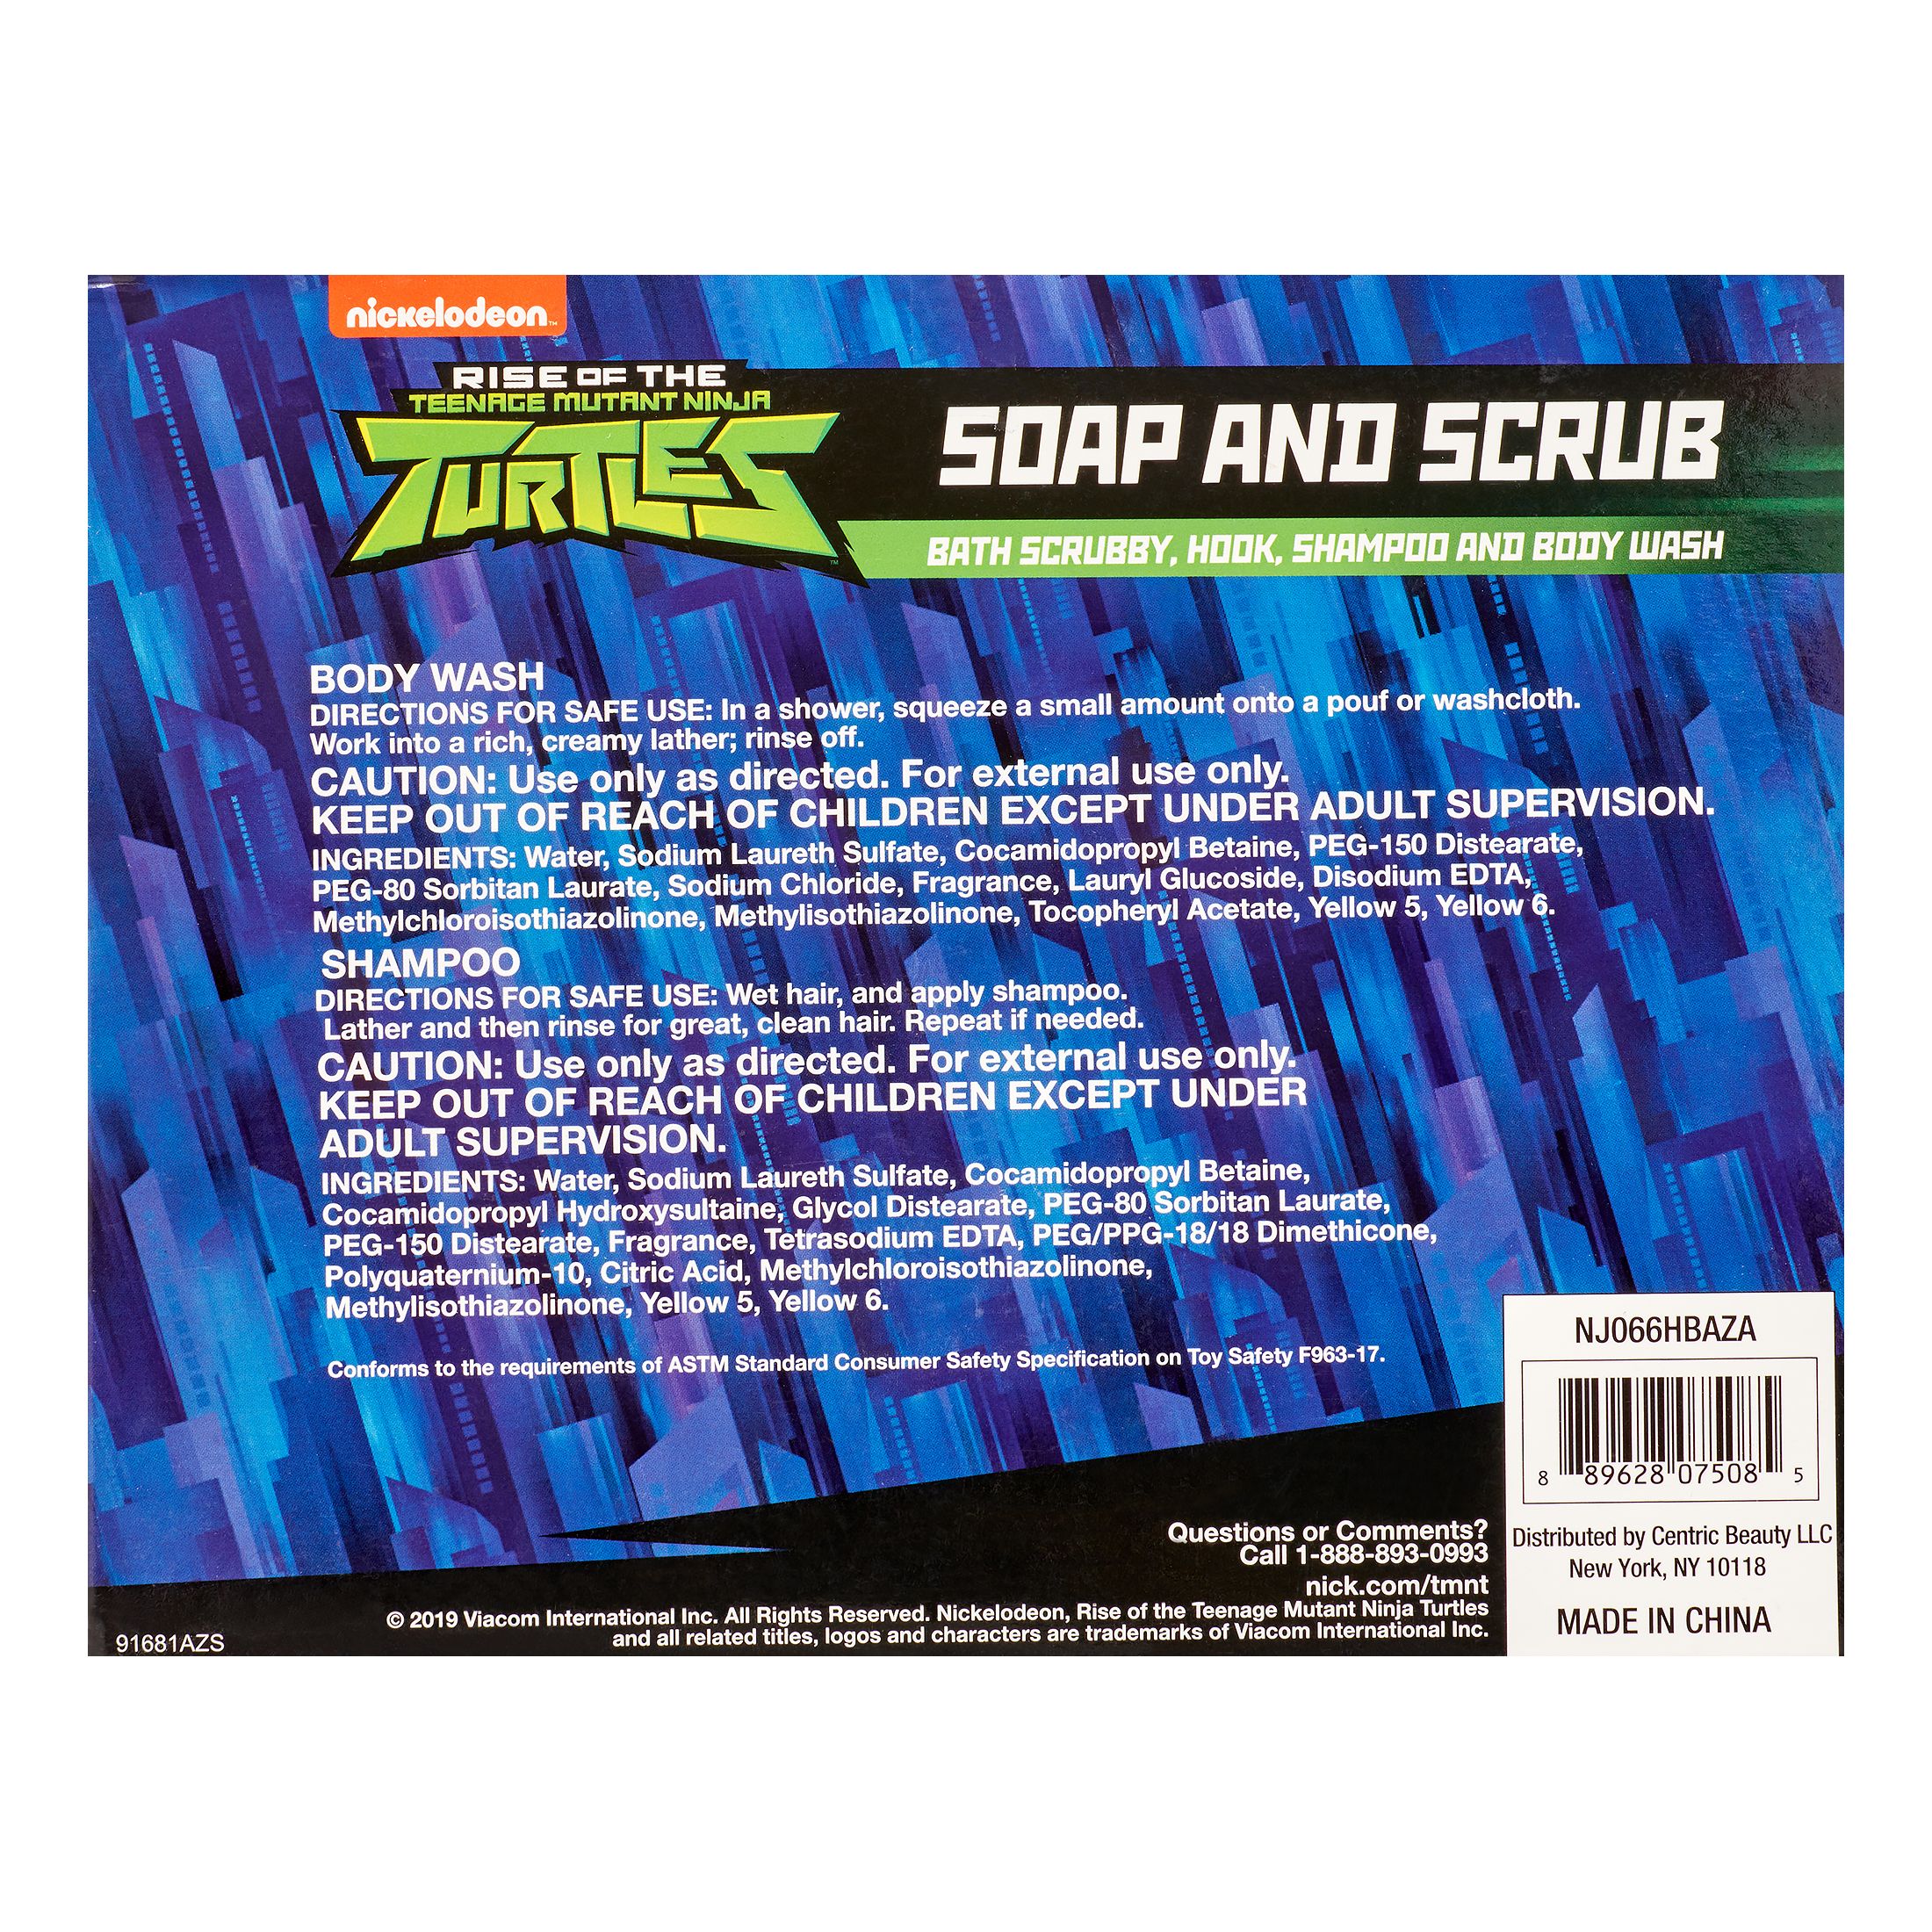 Teenage Mutant Ninja Turtles 4-Piece Soap and Scrub Body Wash and Shampoo Set - image 4 of 5